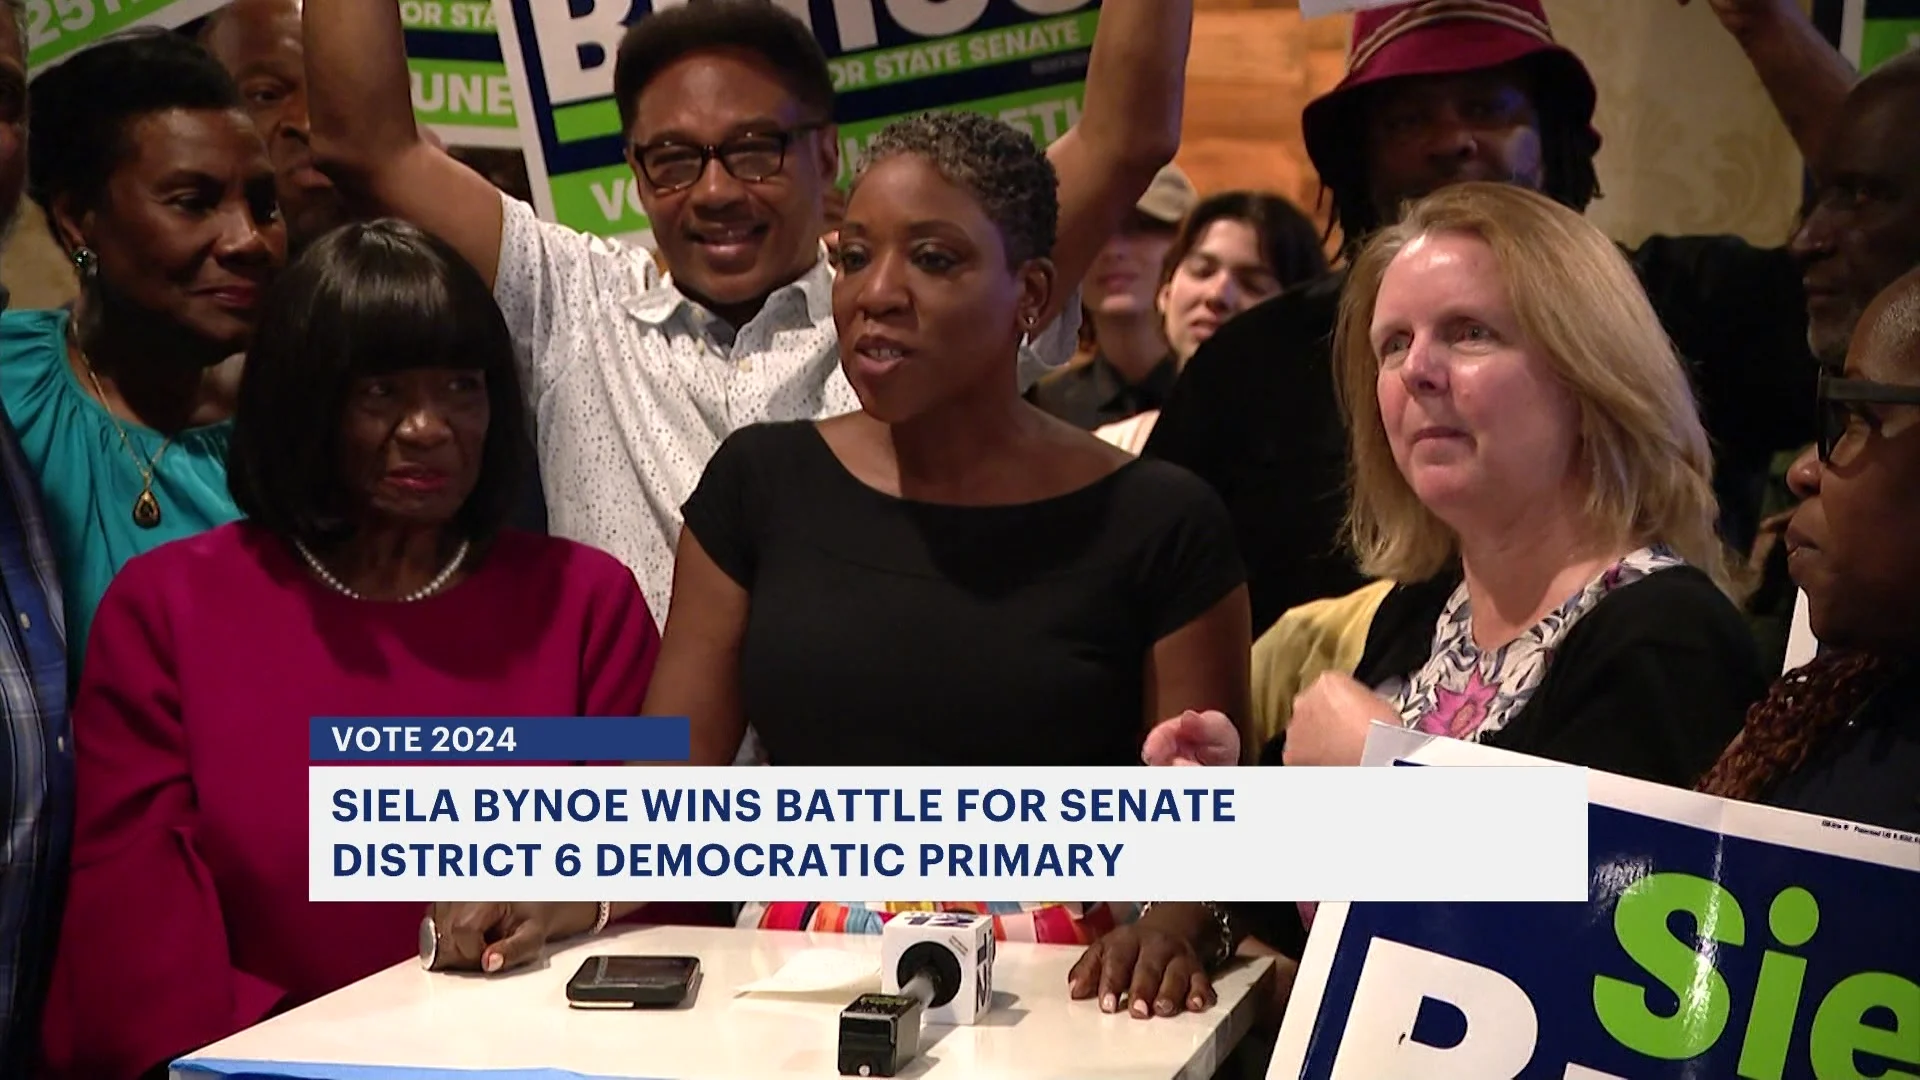 VOTE 2024: Siela Bynoe wins battle for Senate District 6 Democratic primary